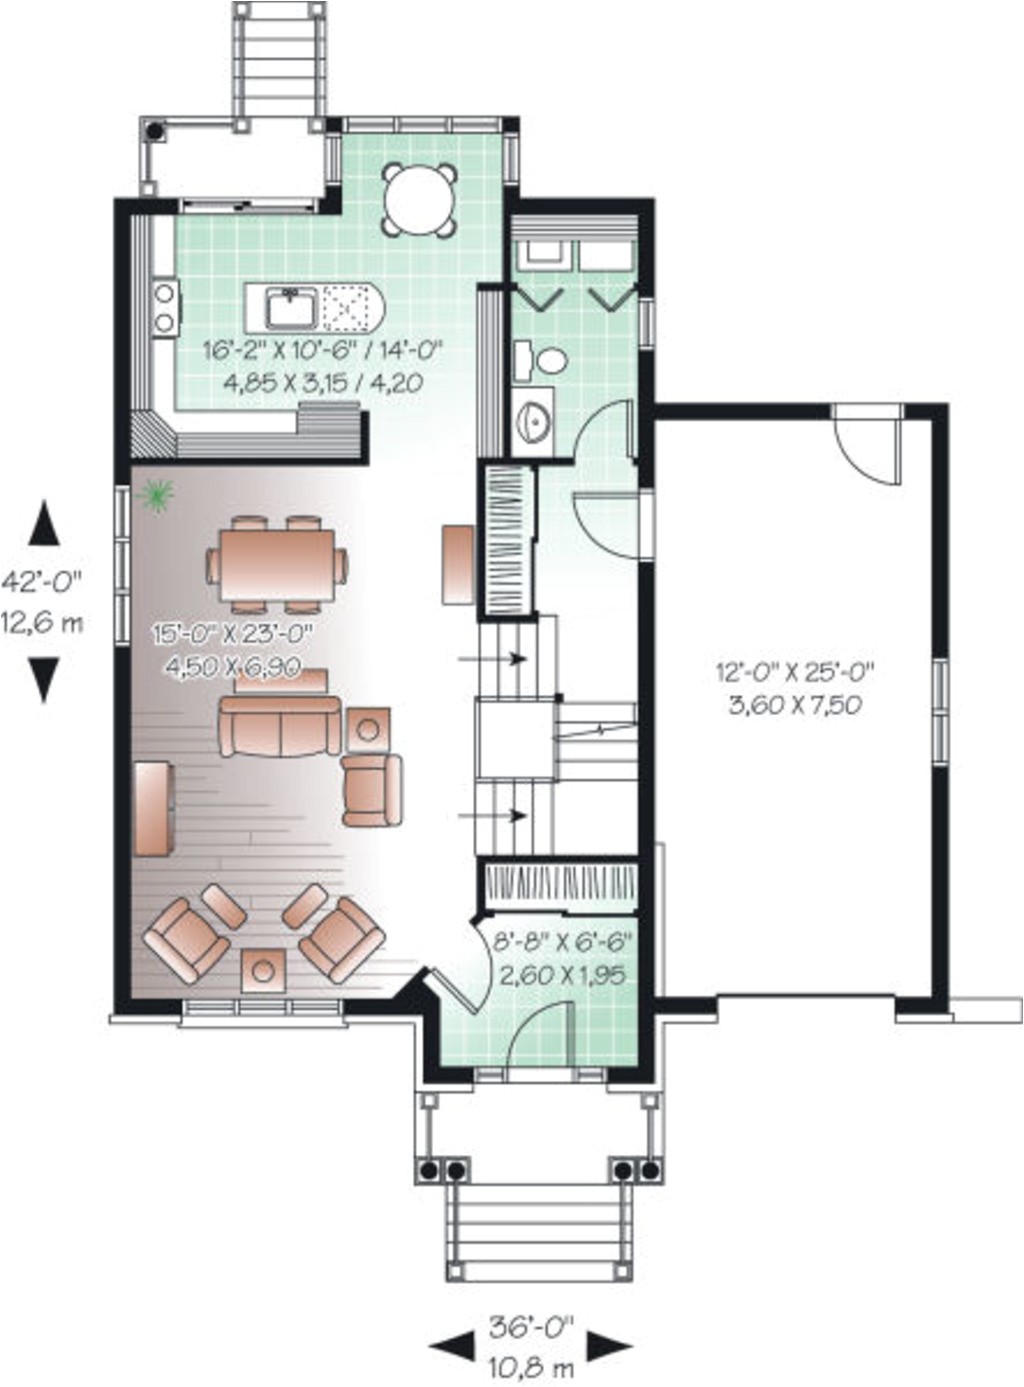 cmu housing floor plans